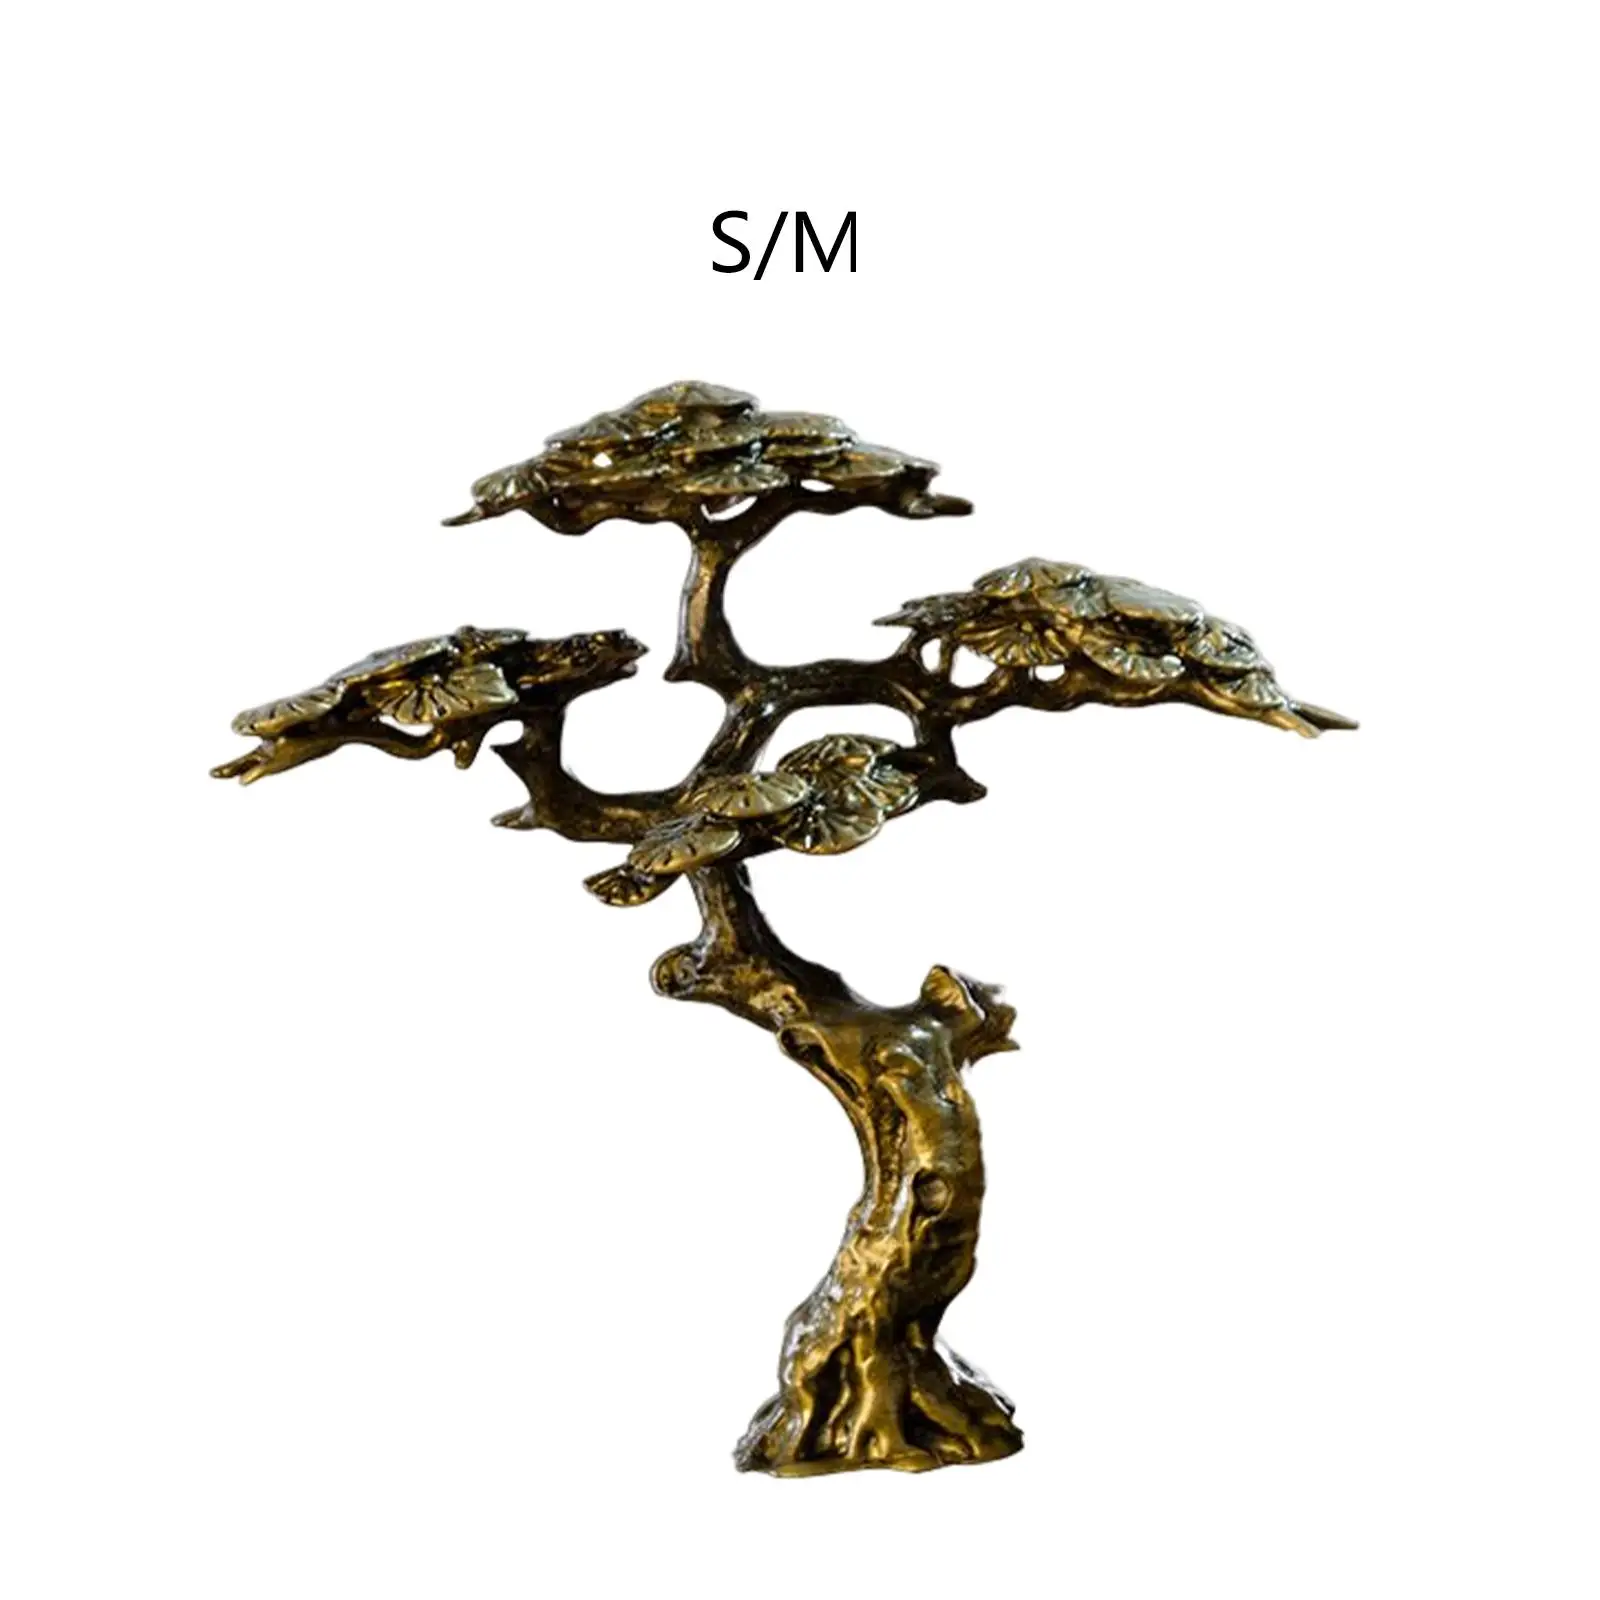 Antique Tree Statue Miniature Figurine Mini Welcoming Pine Ornament for Festivals Bonsai Decoration